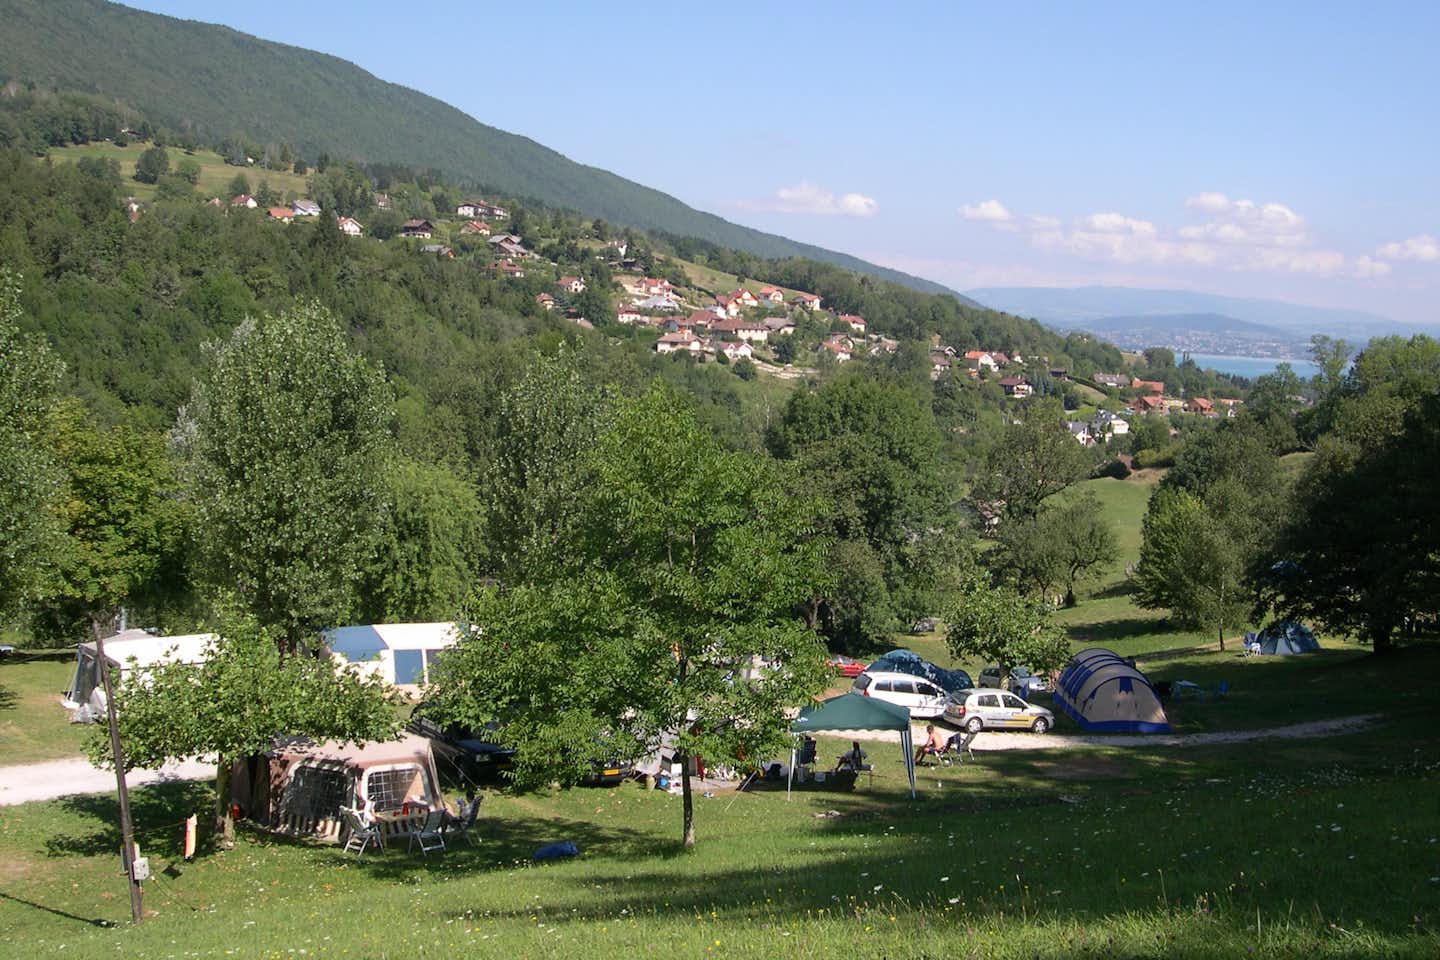 Camping Le Crêtoux  - Campingplatz am Fuße eines Berges in der Nähe vom See Lac d'Annecy